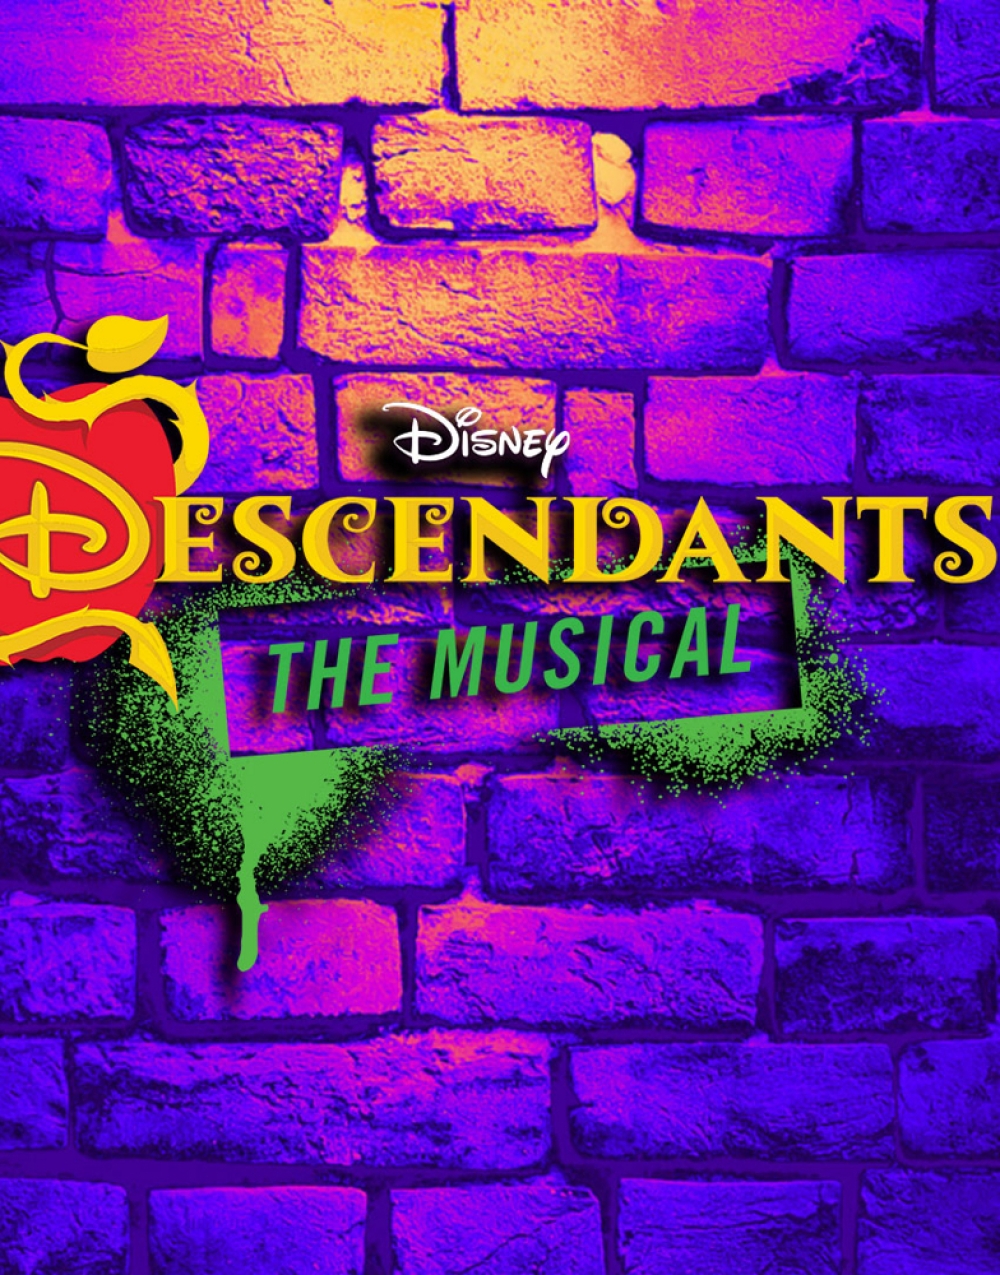 Disney's Descendants: The Musical at Enterprise High School Theatre